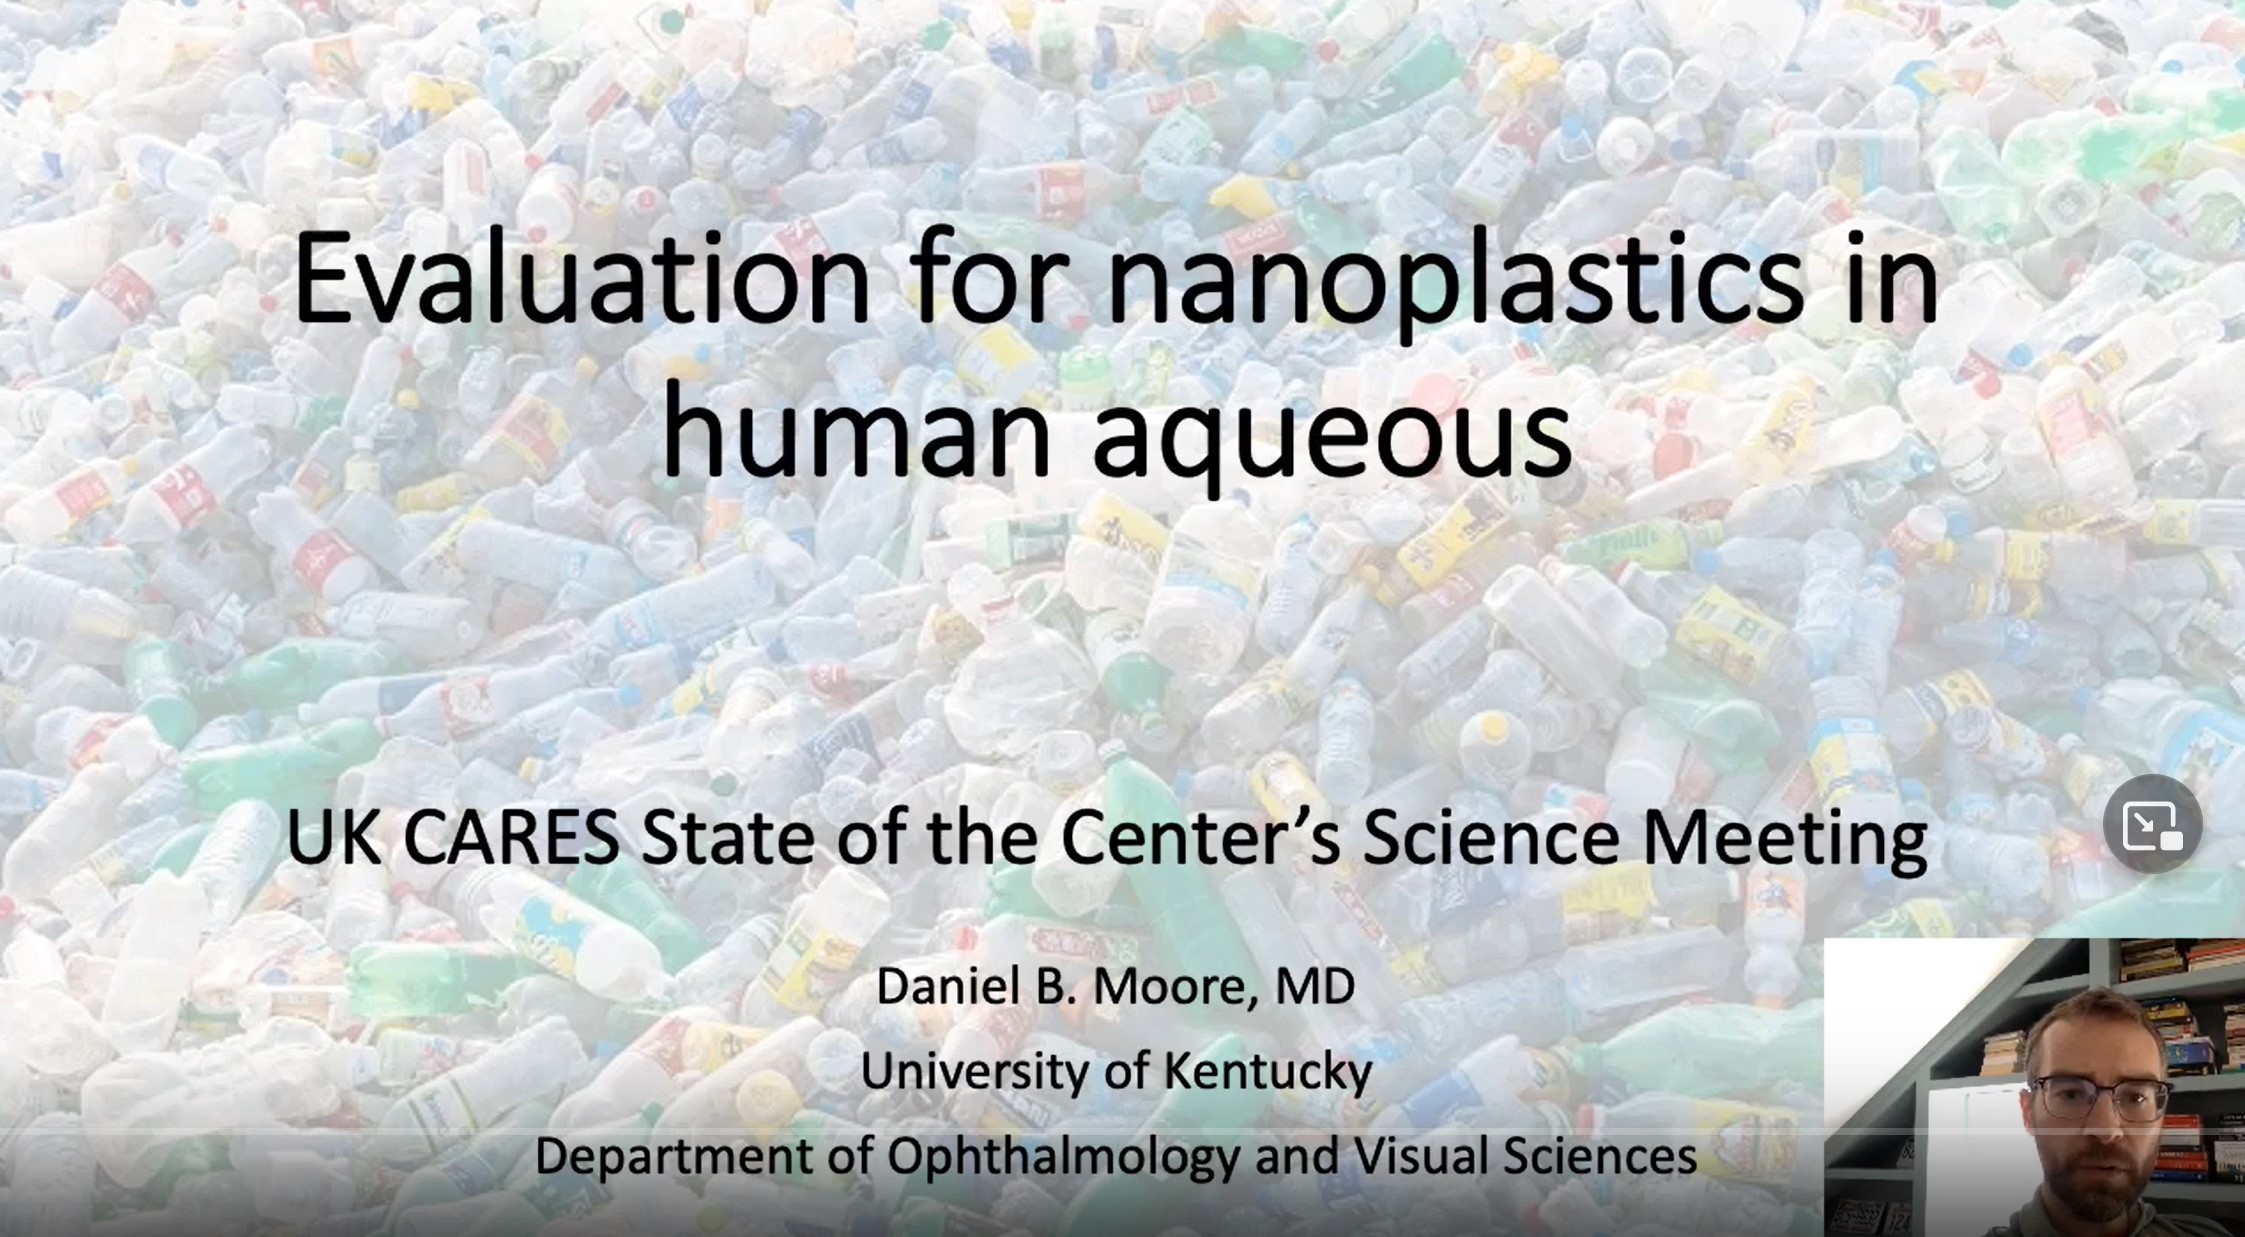 Dr. Daniel B. Moore's Work on Nanoplastics